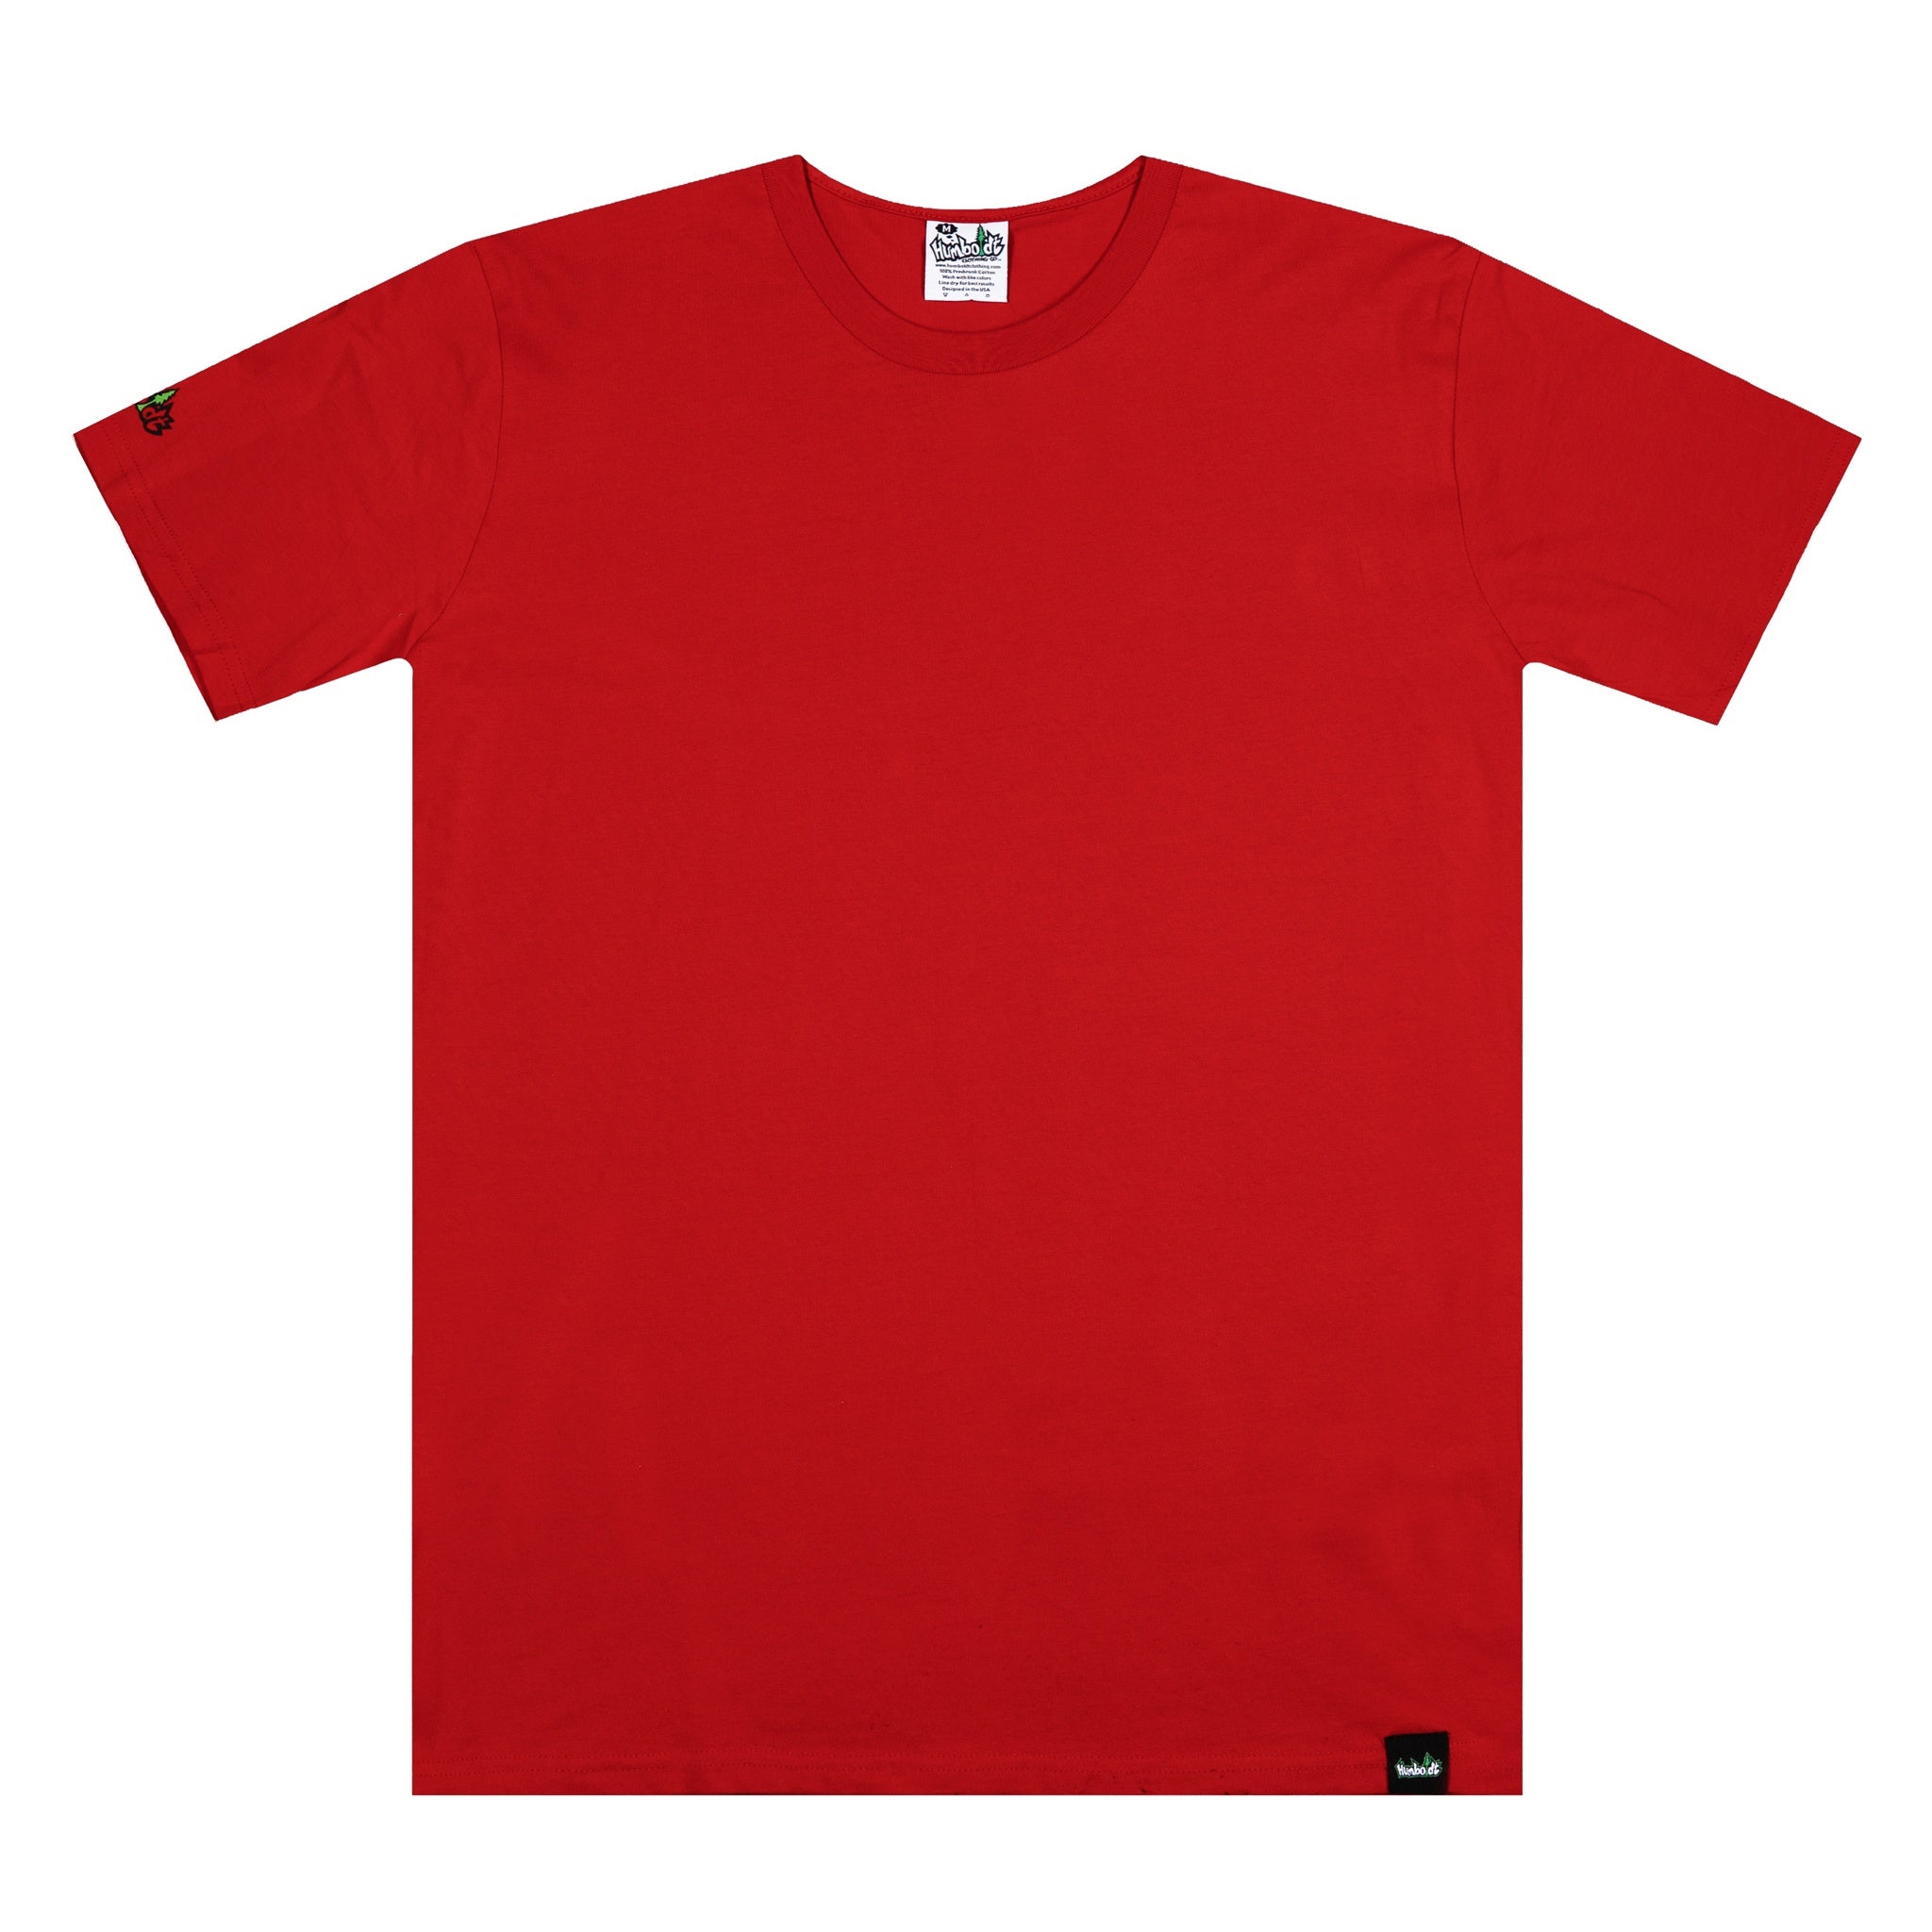 Humboldt Blank Tshirt Red